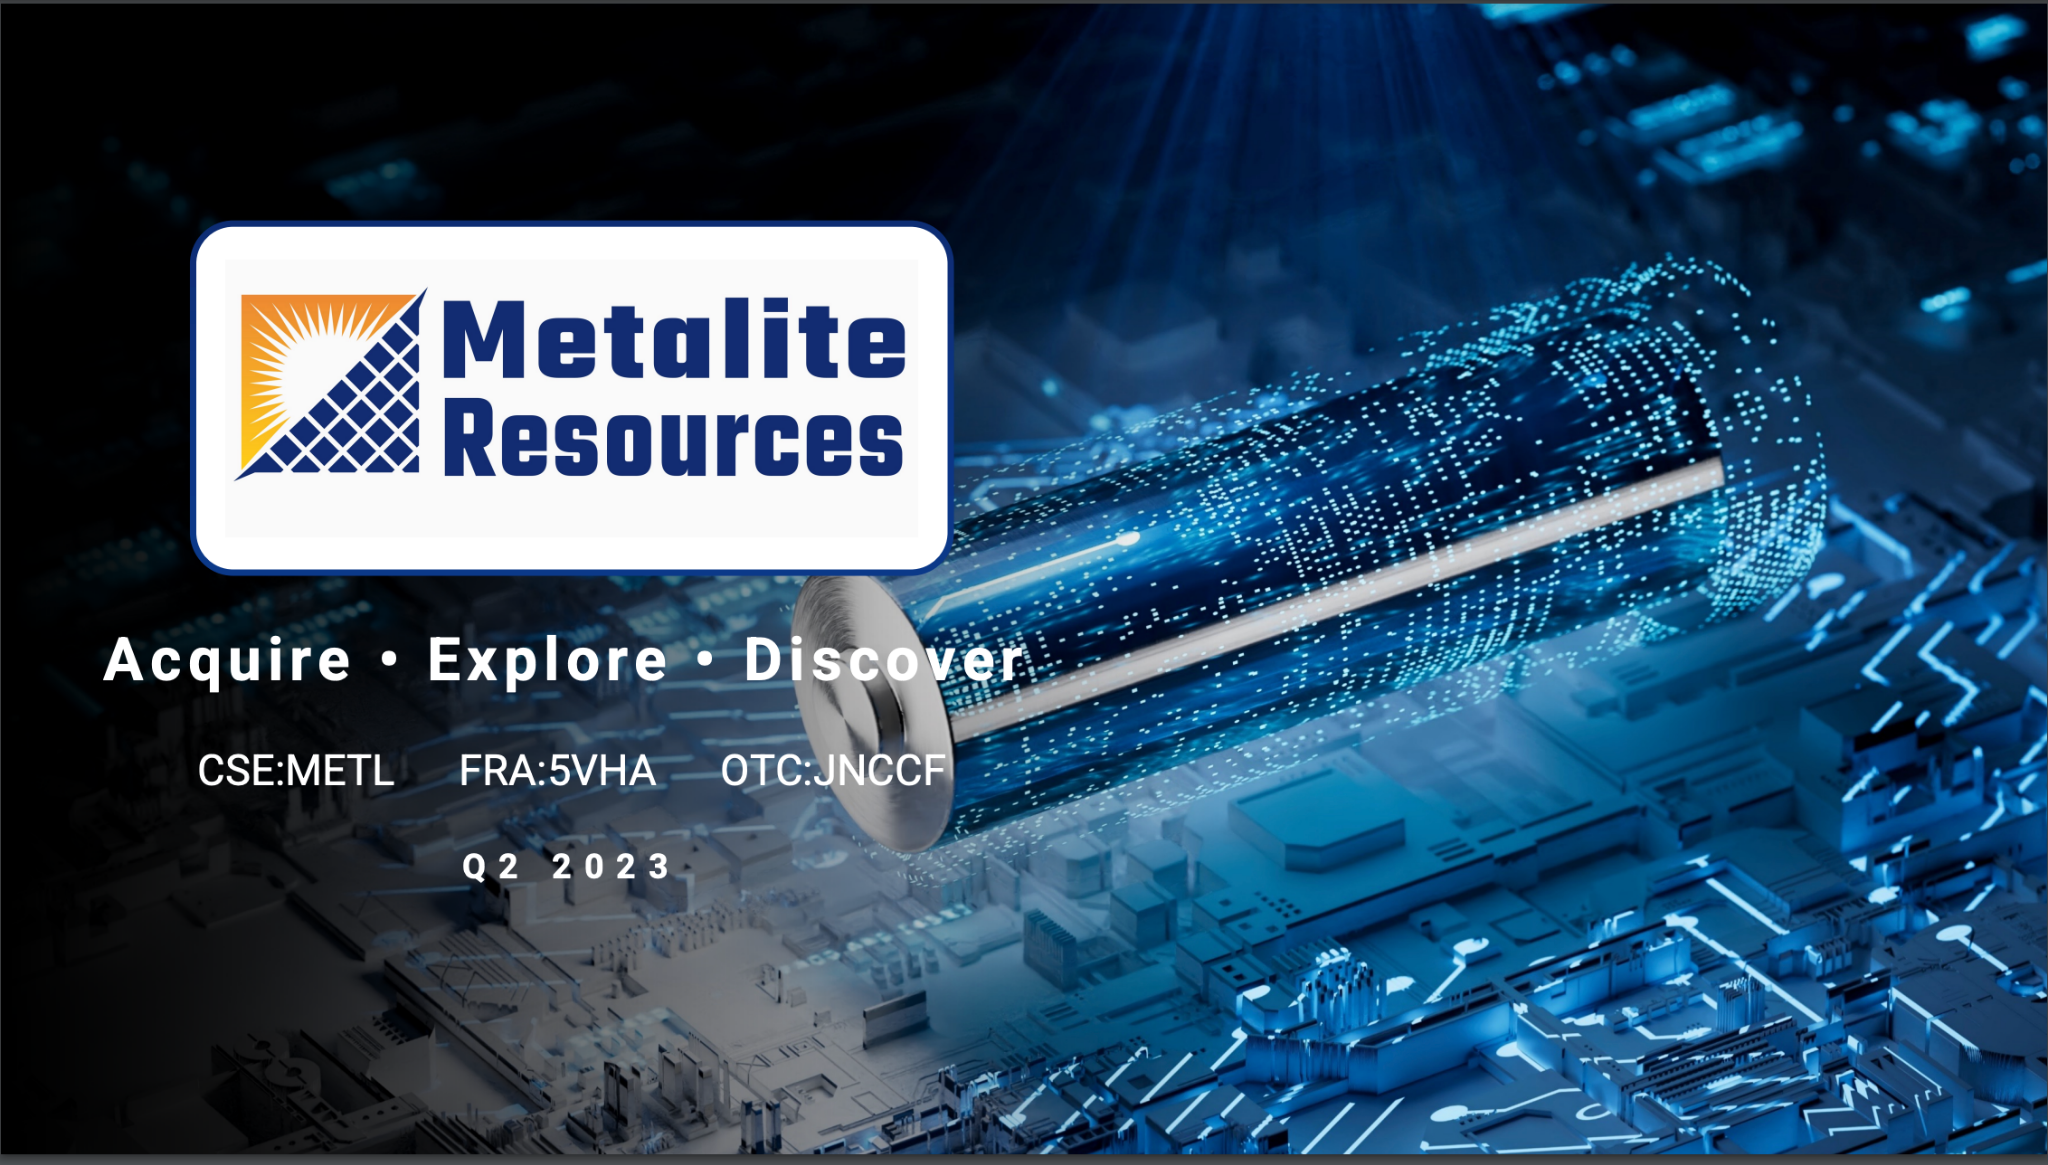 Metalite Resources